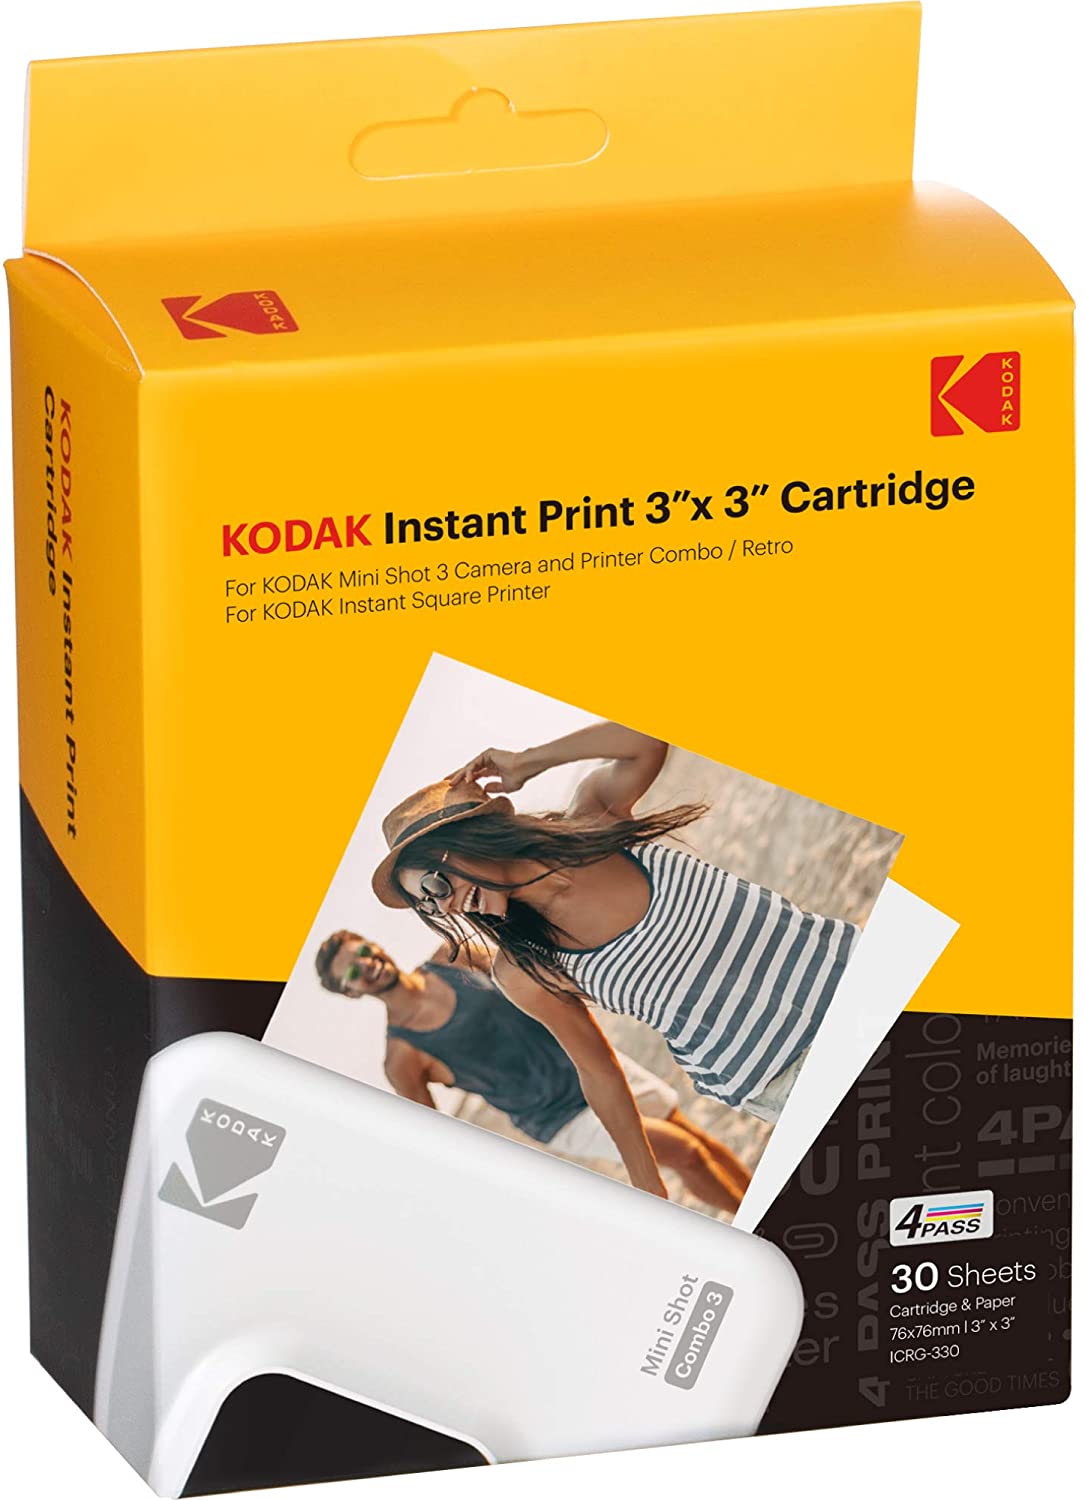 Kodak Instant Print 3x3 Cartridge